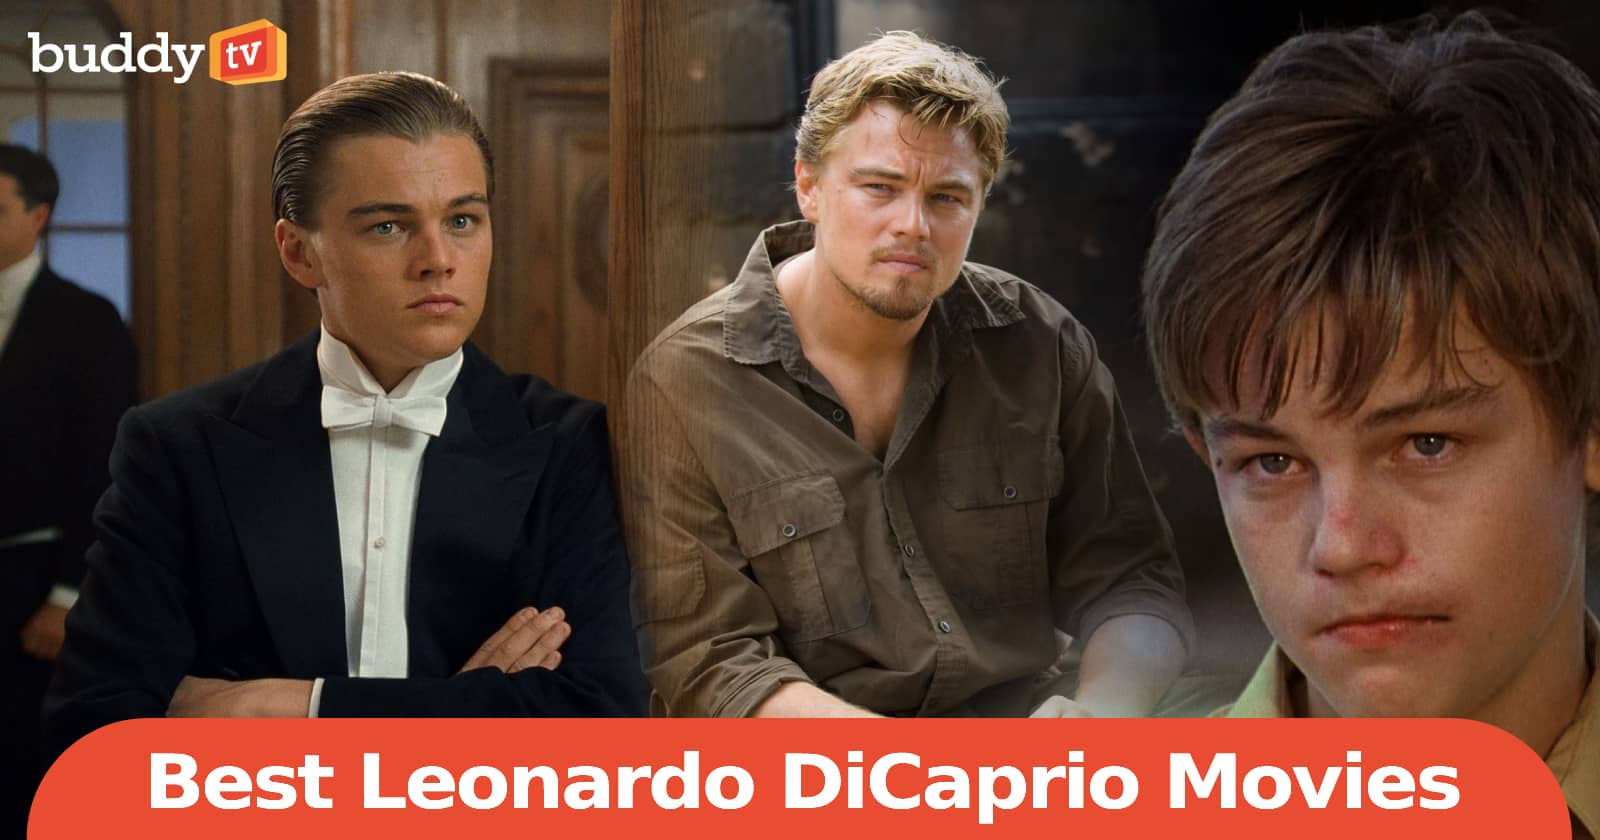 10 Best Leonardo DiCaprio Movies, Ranked by Viewers